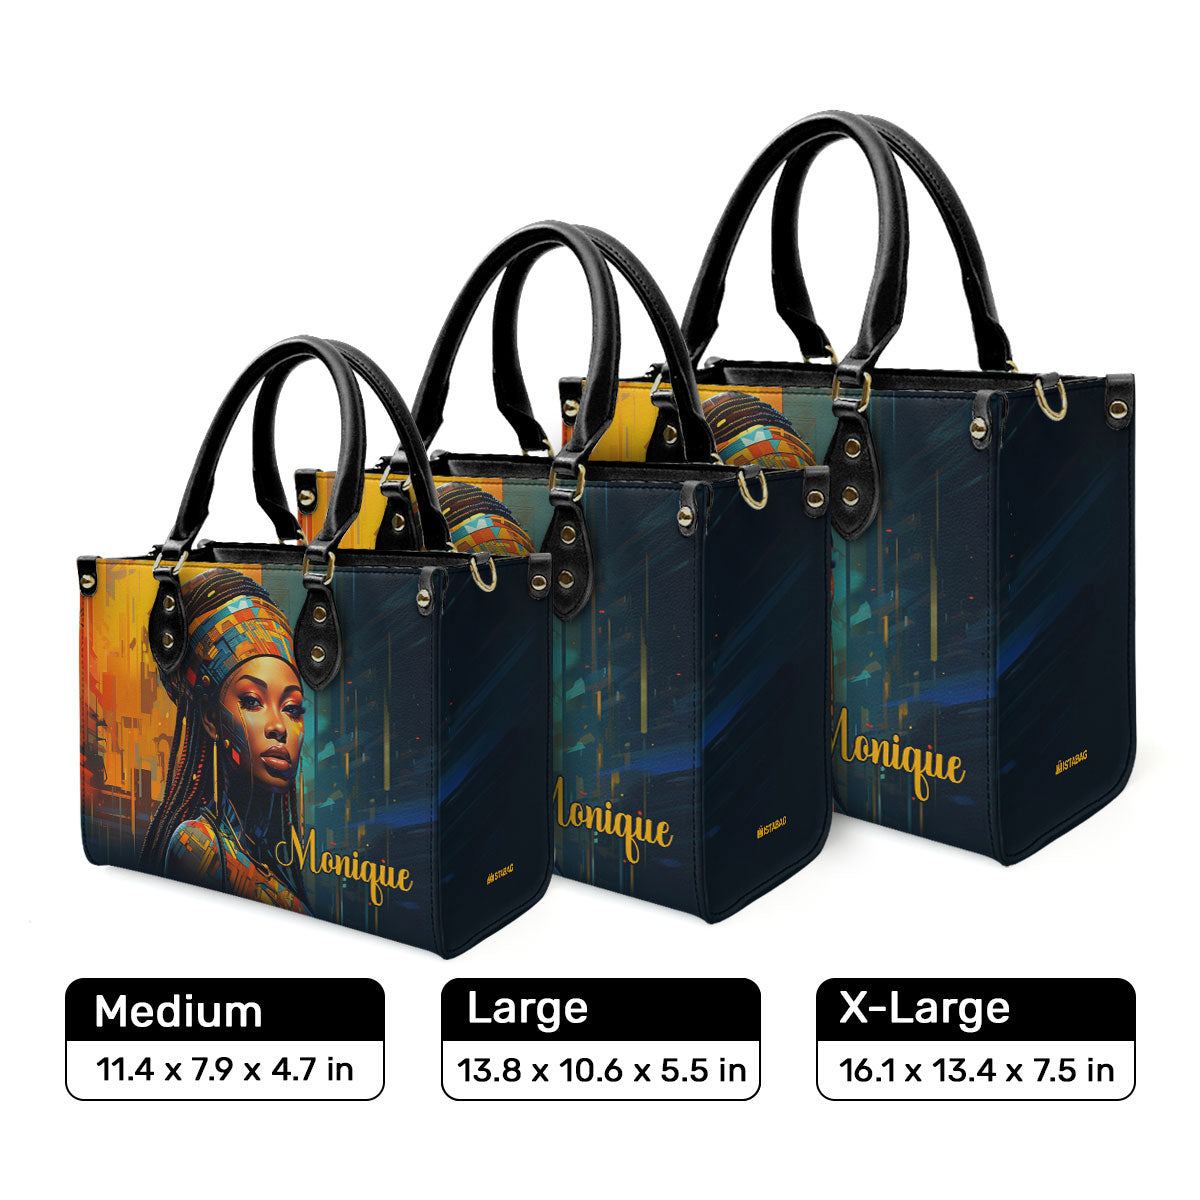 Afrofuturism09 - Personalized Leather Handbag SB121